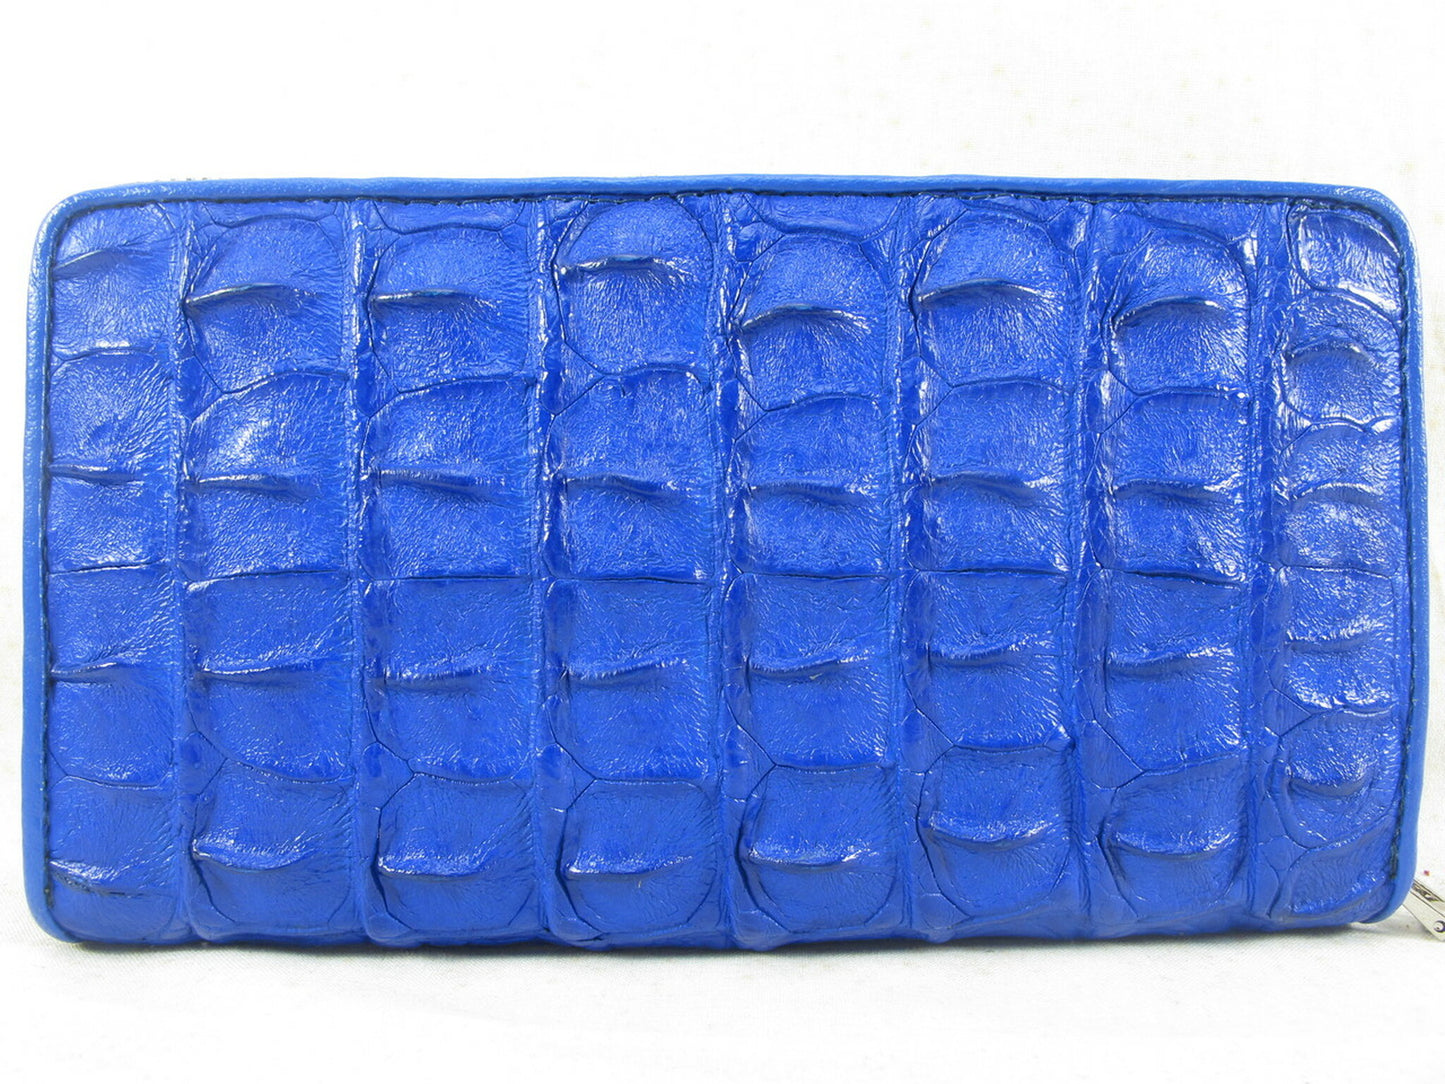 Genuine Crocodile Backbone Skin Leather Large Zip Around Clutch Wallet Purse